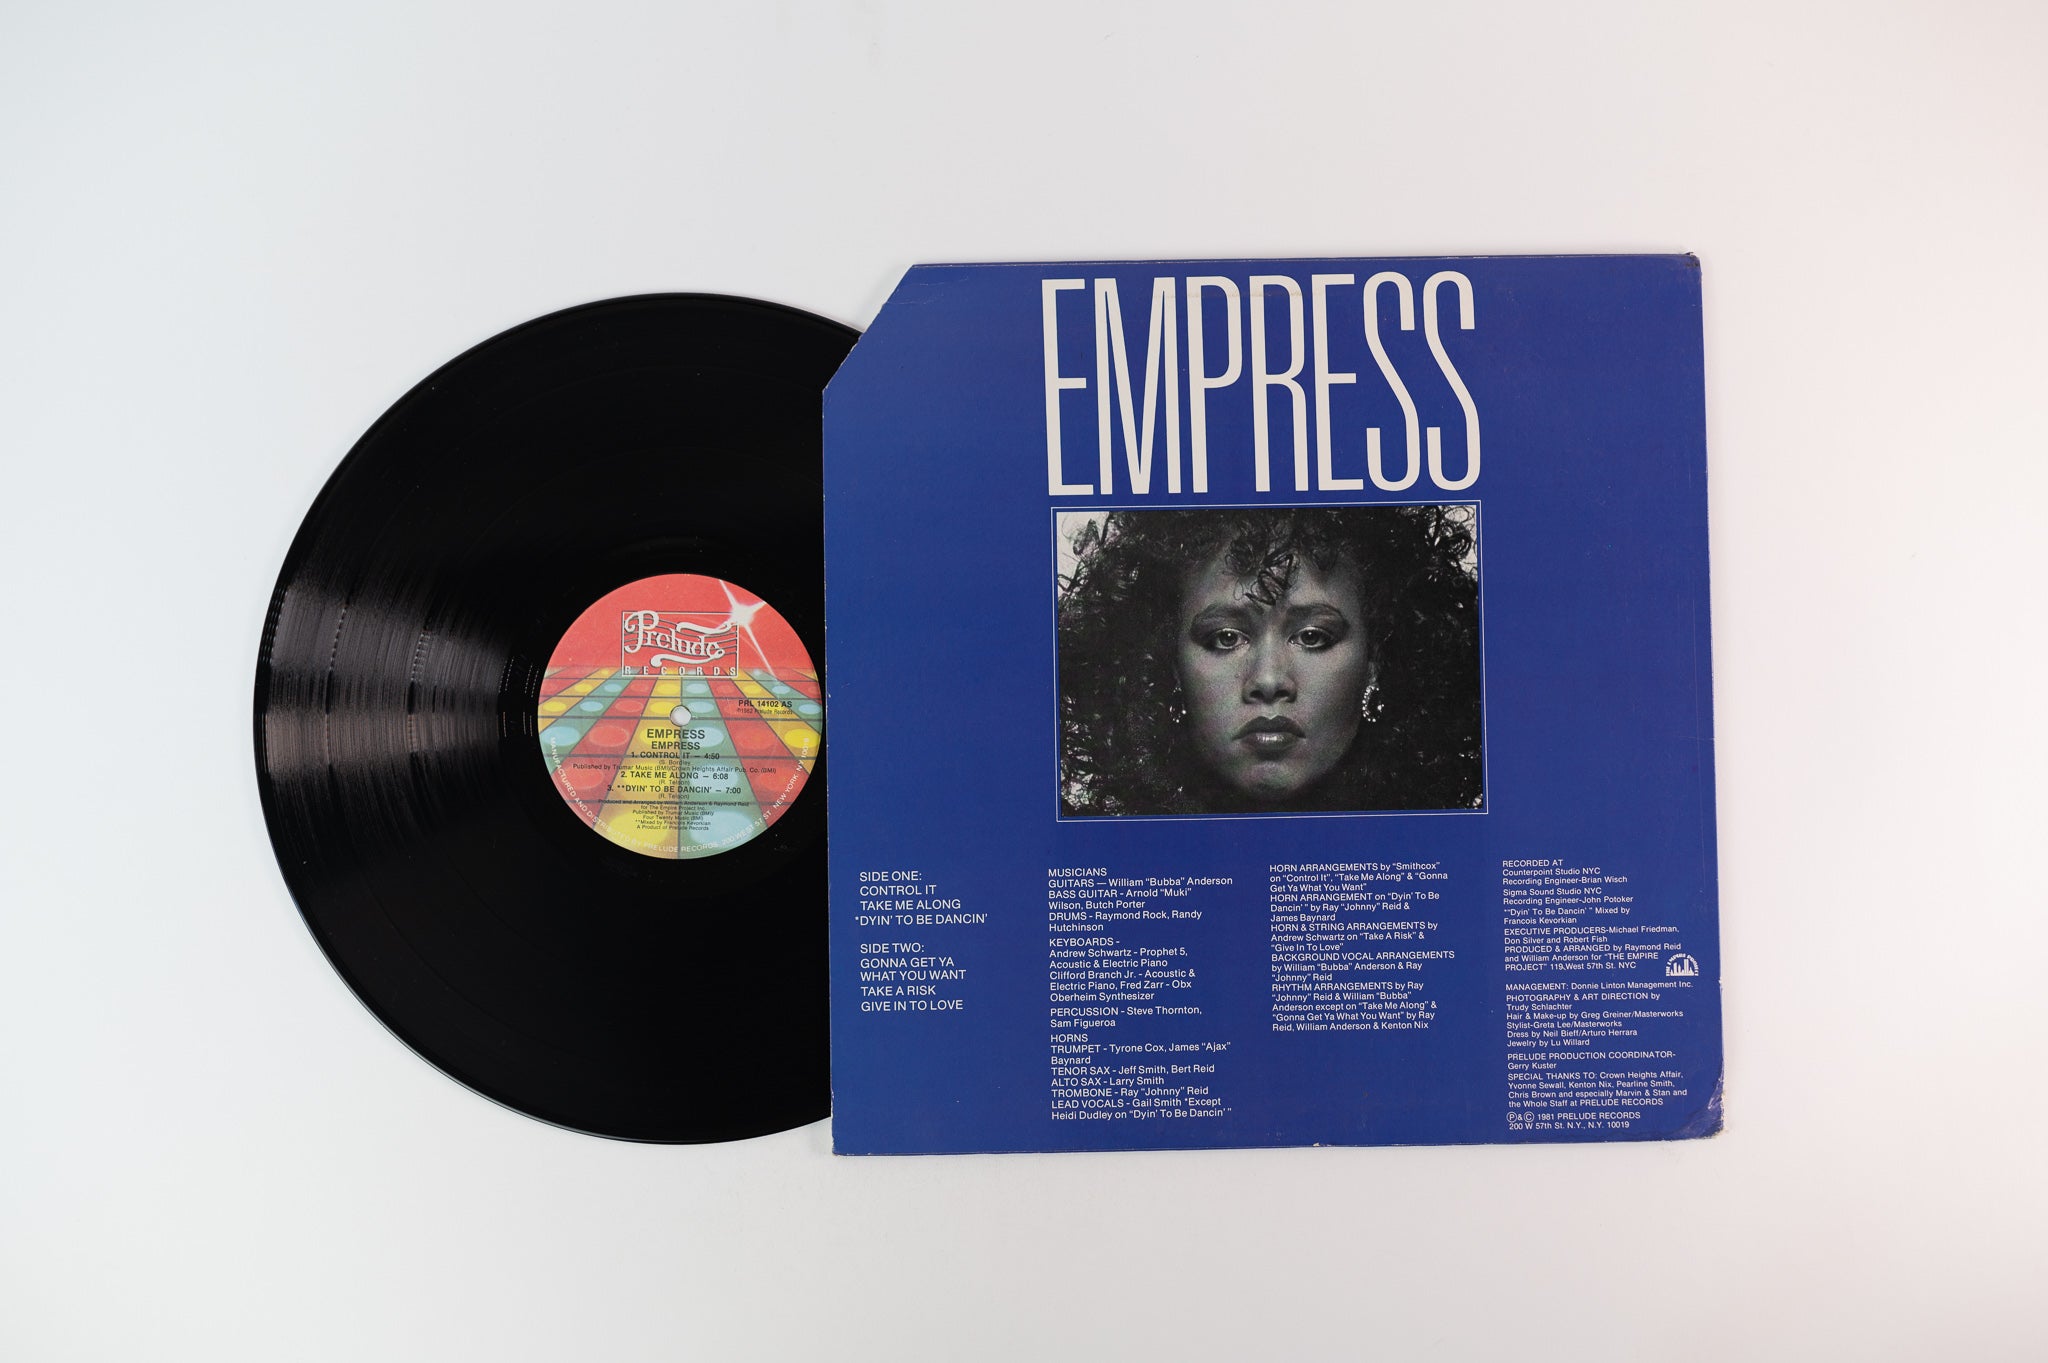 Empress - Empress on Prelude